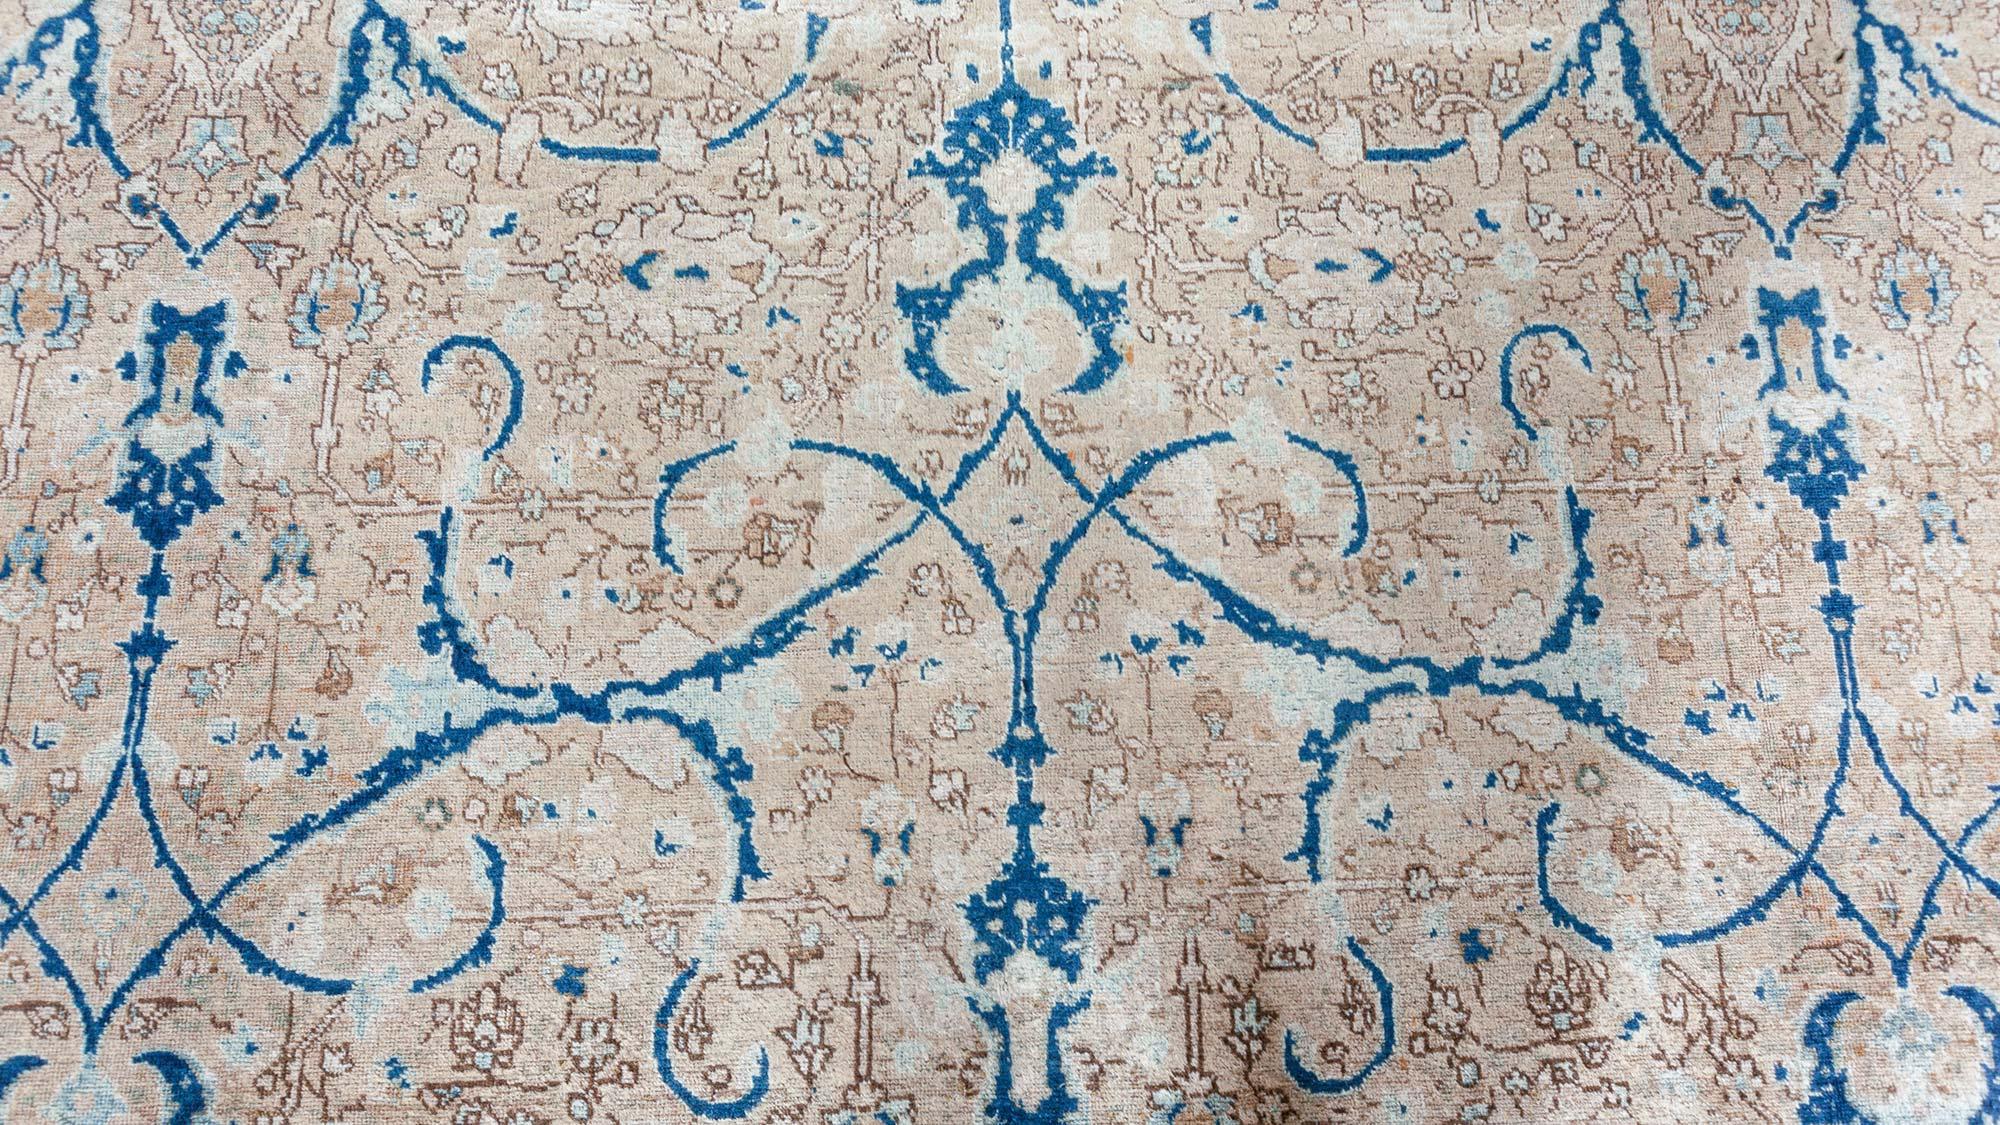 Antique Persian Tabriz rug.
Size: 11'2